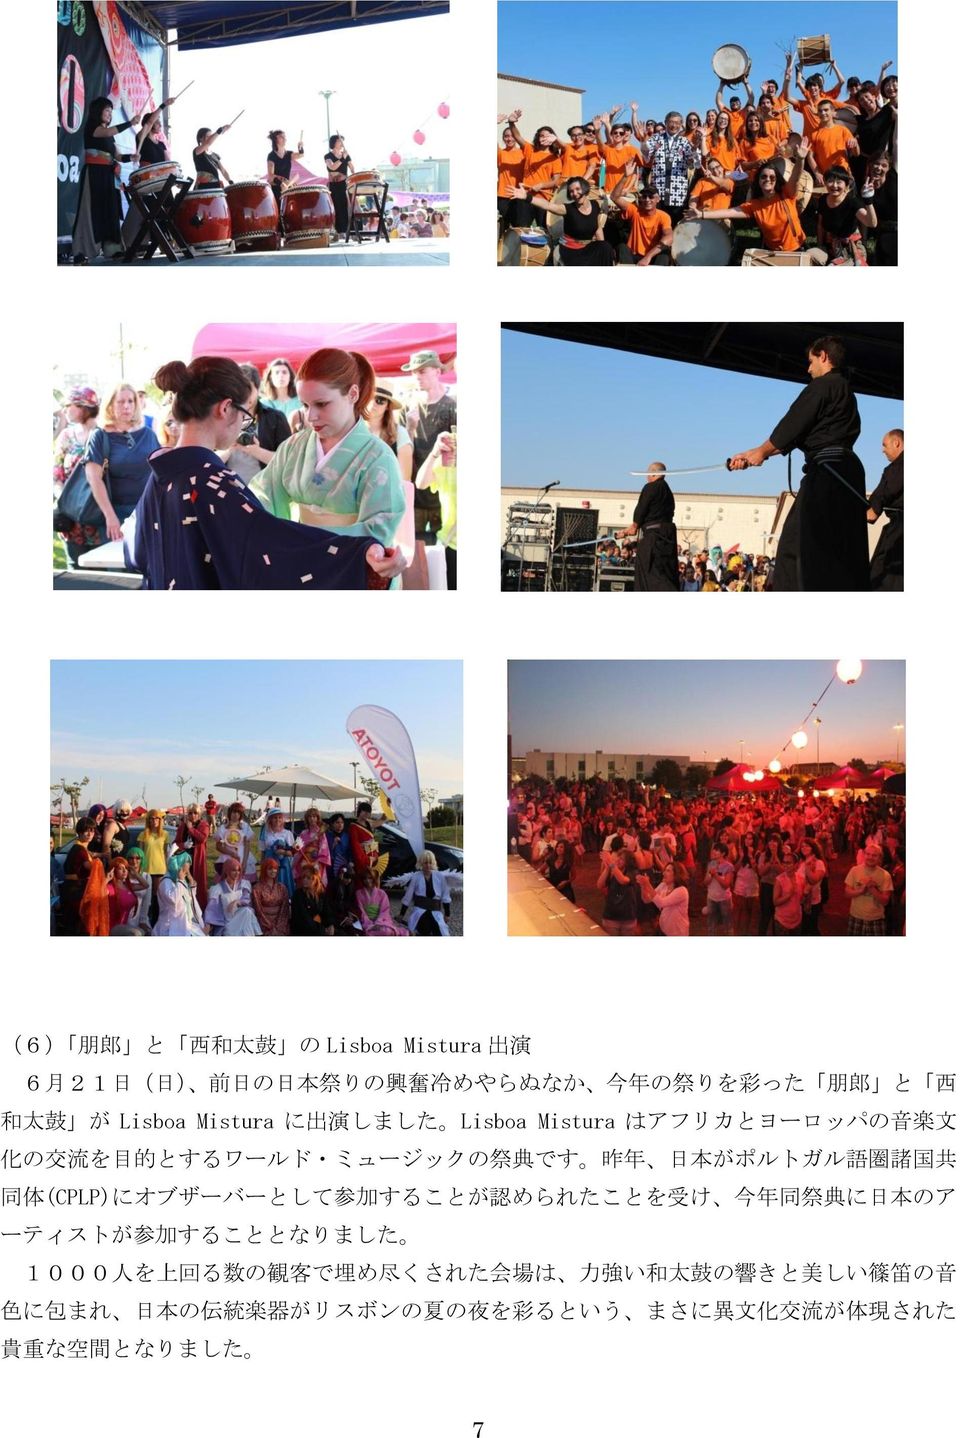 (CPLP)にオブザーバーとして 参 加 することが 認 められたことを 受 け 今 年 同 祭 典 に 日 本 のア ーティストが 参 加 することとなりました 1000 人 を 上 回 る 数 の 観 客 で 埋 め 尽 くされた 会